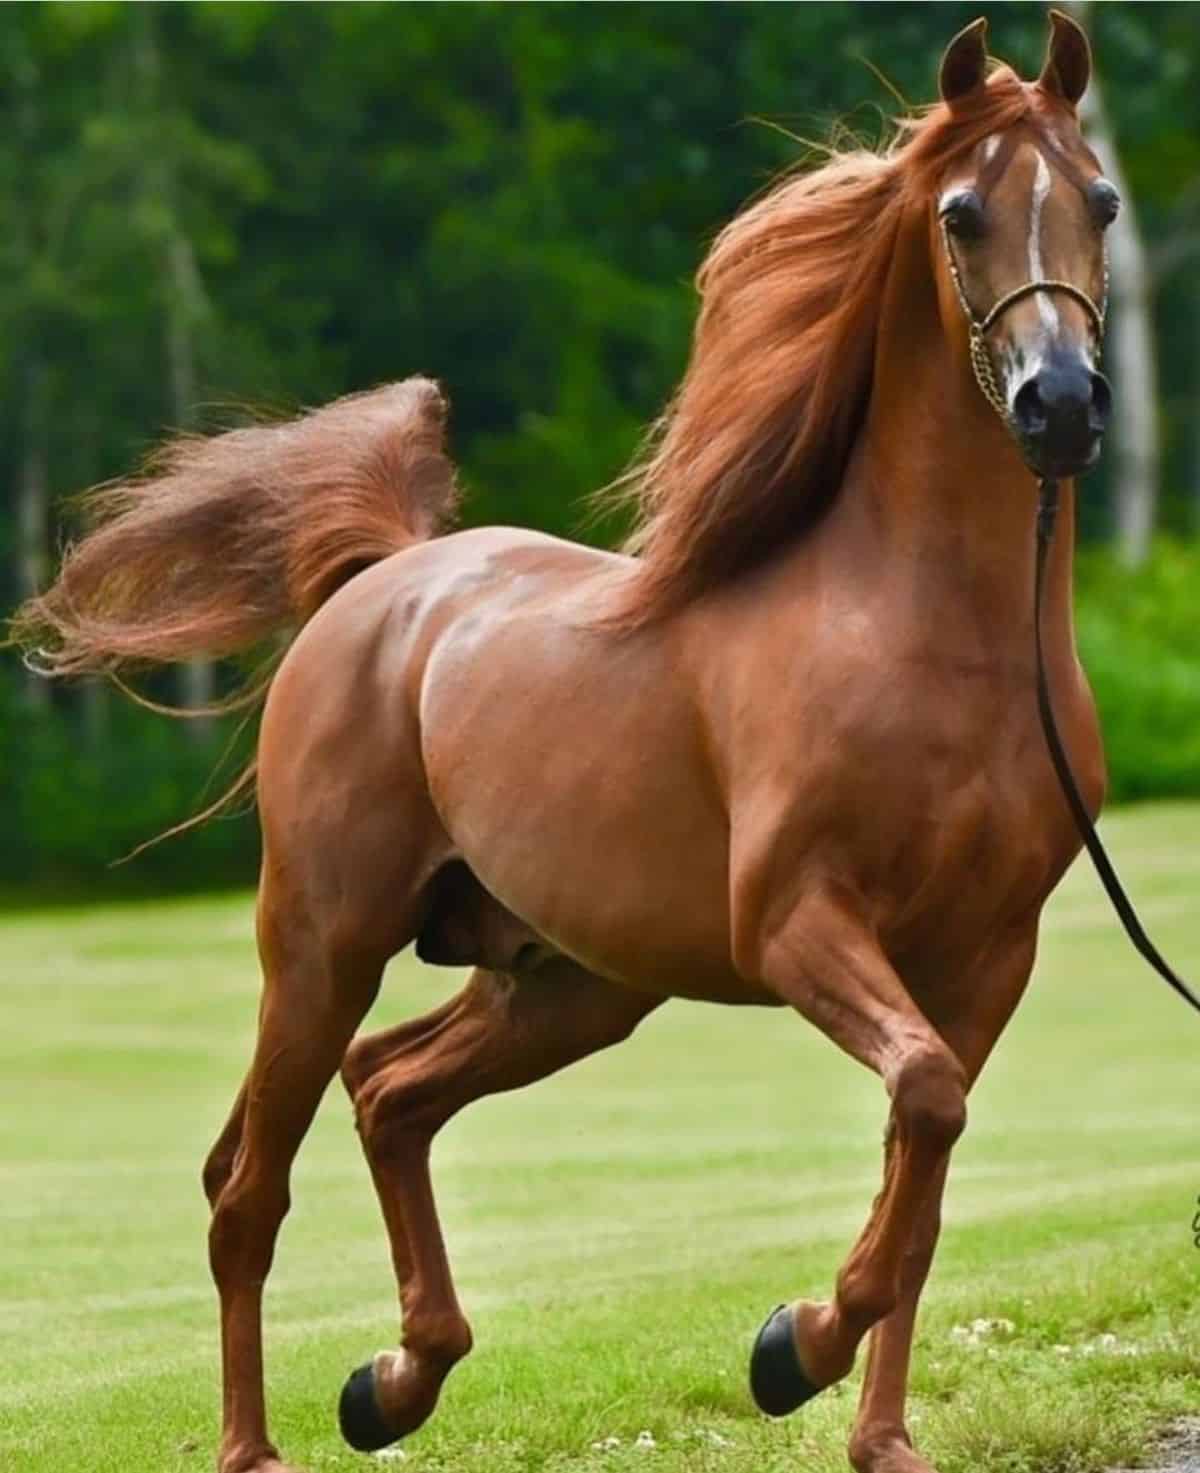 A bown Arabian horse walks on a green lawn.